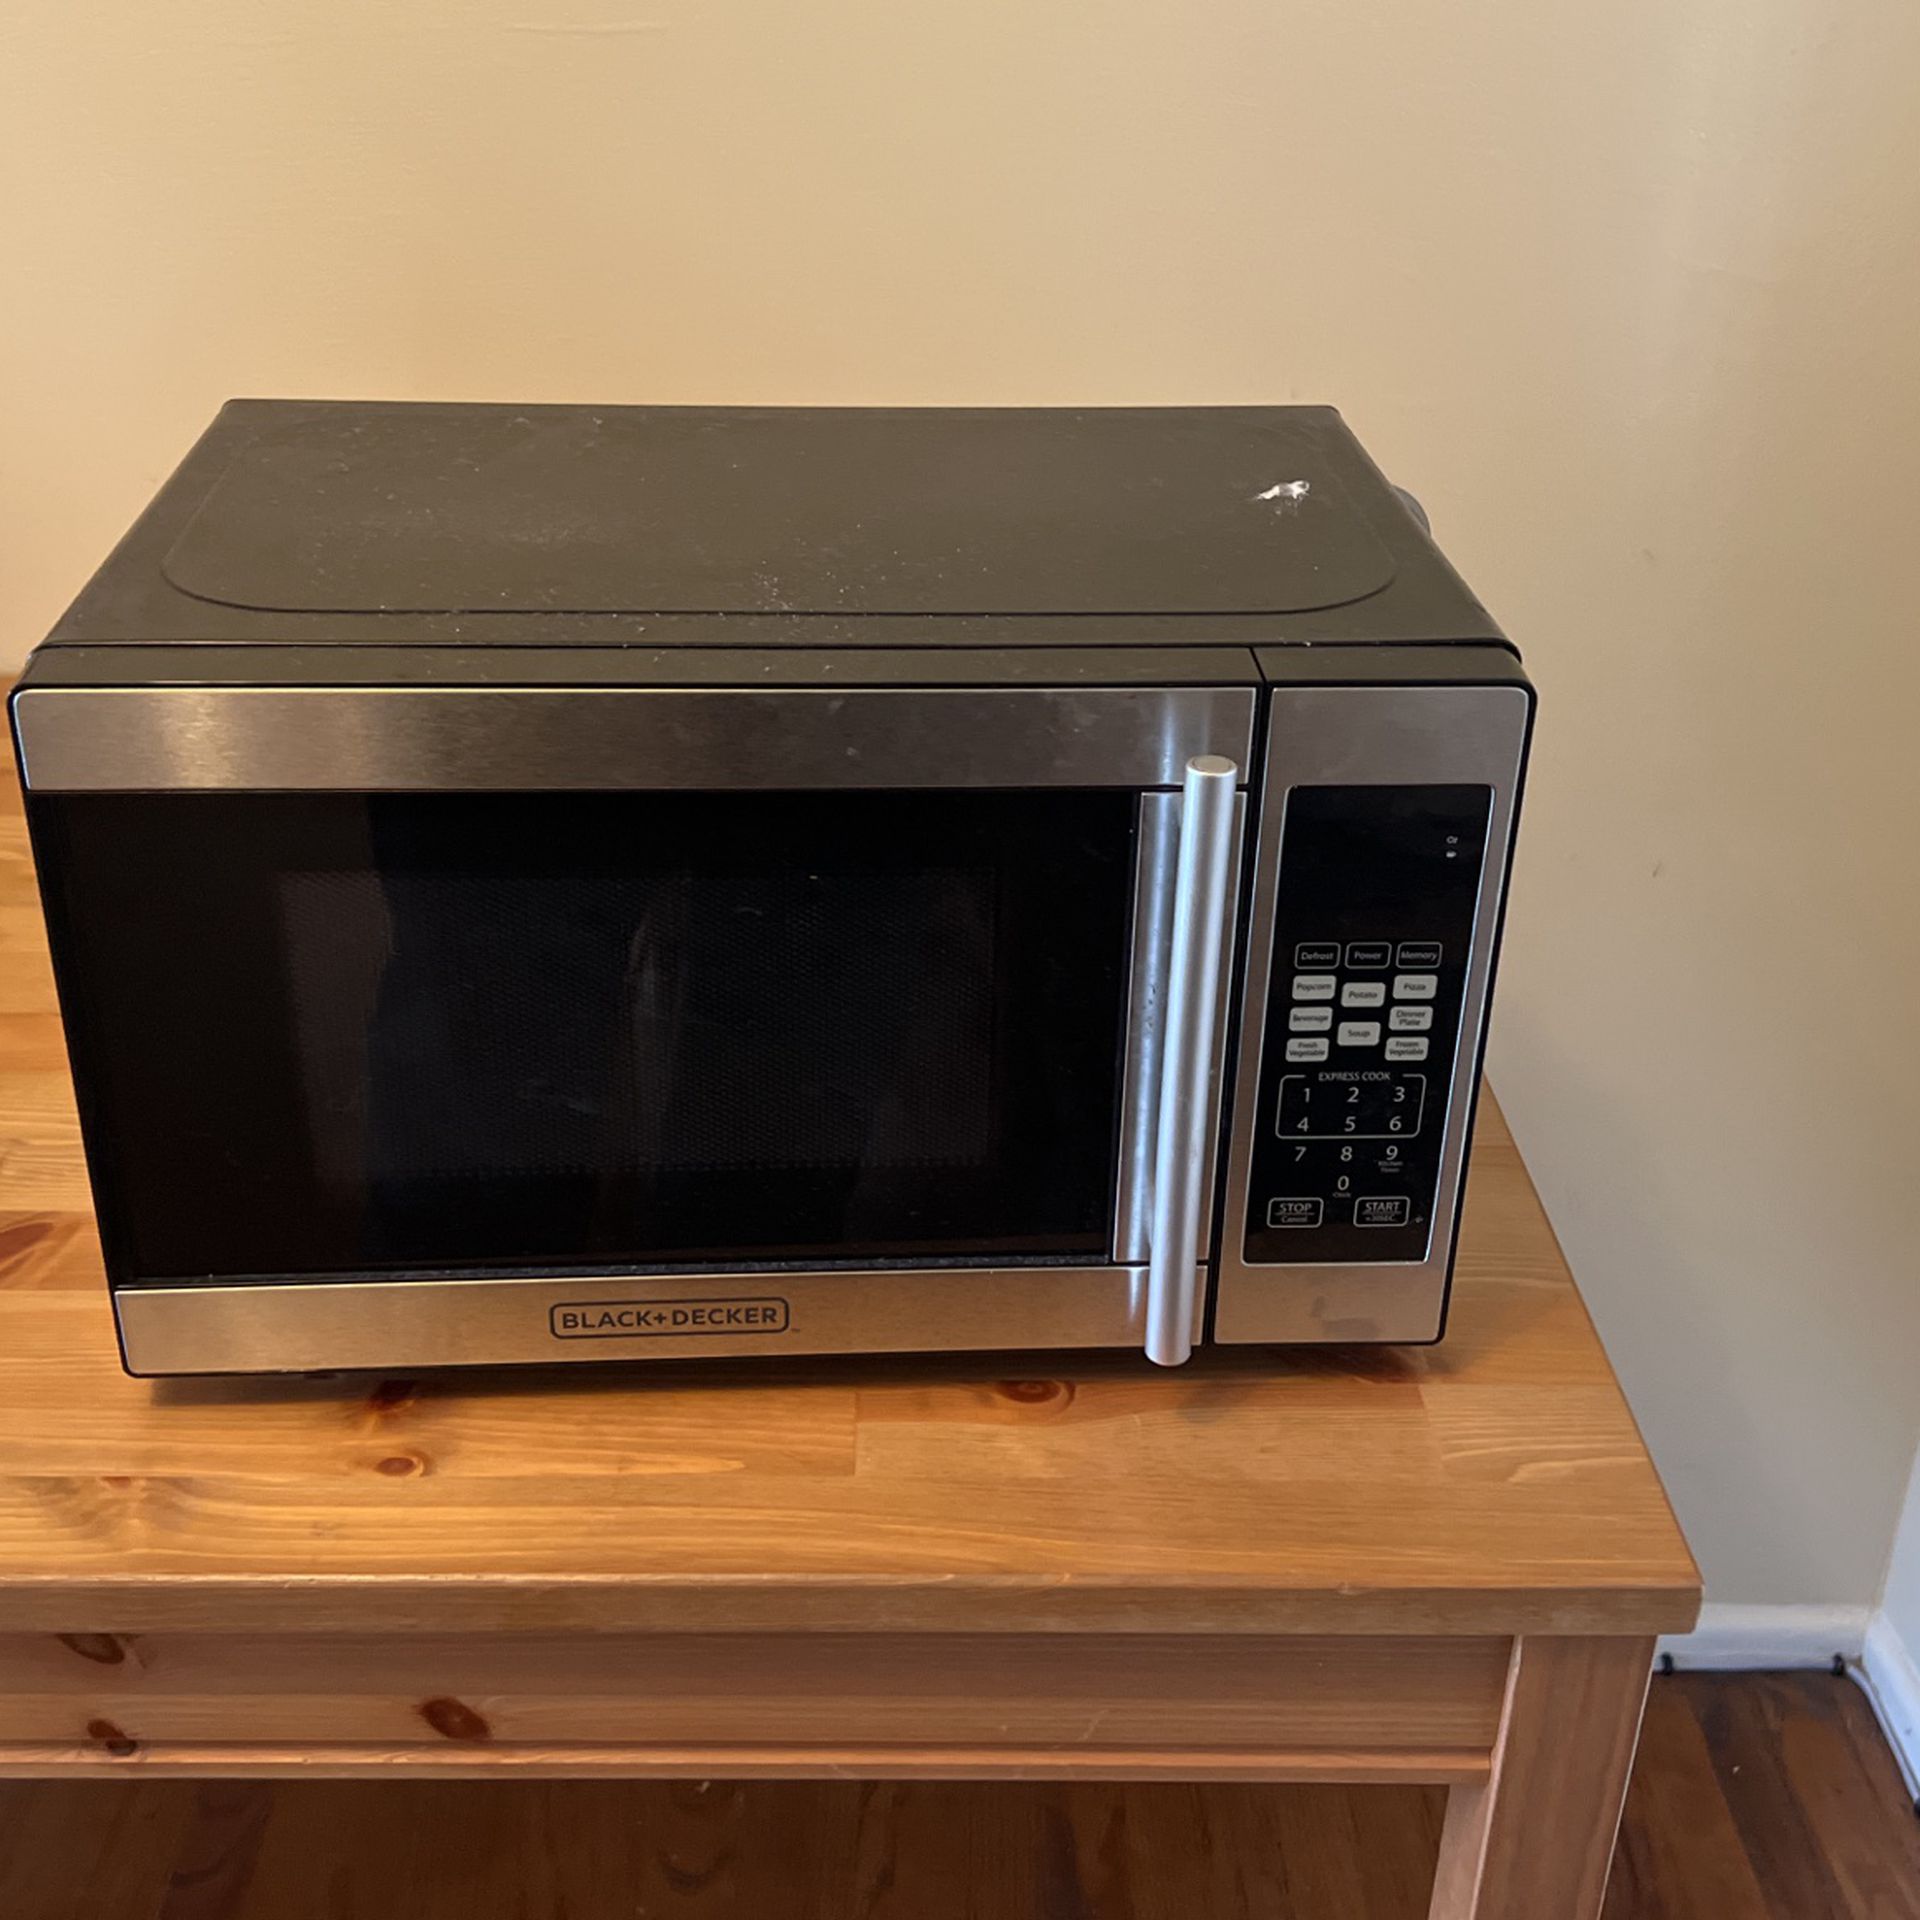 Black & Decker microwave